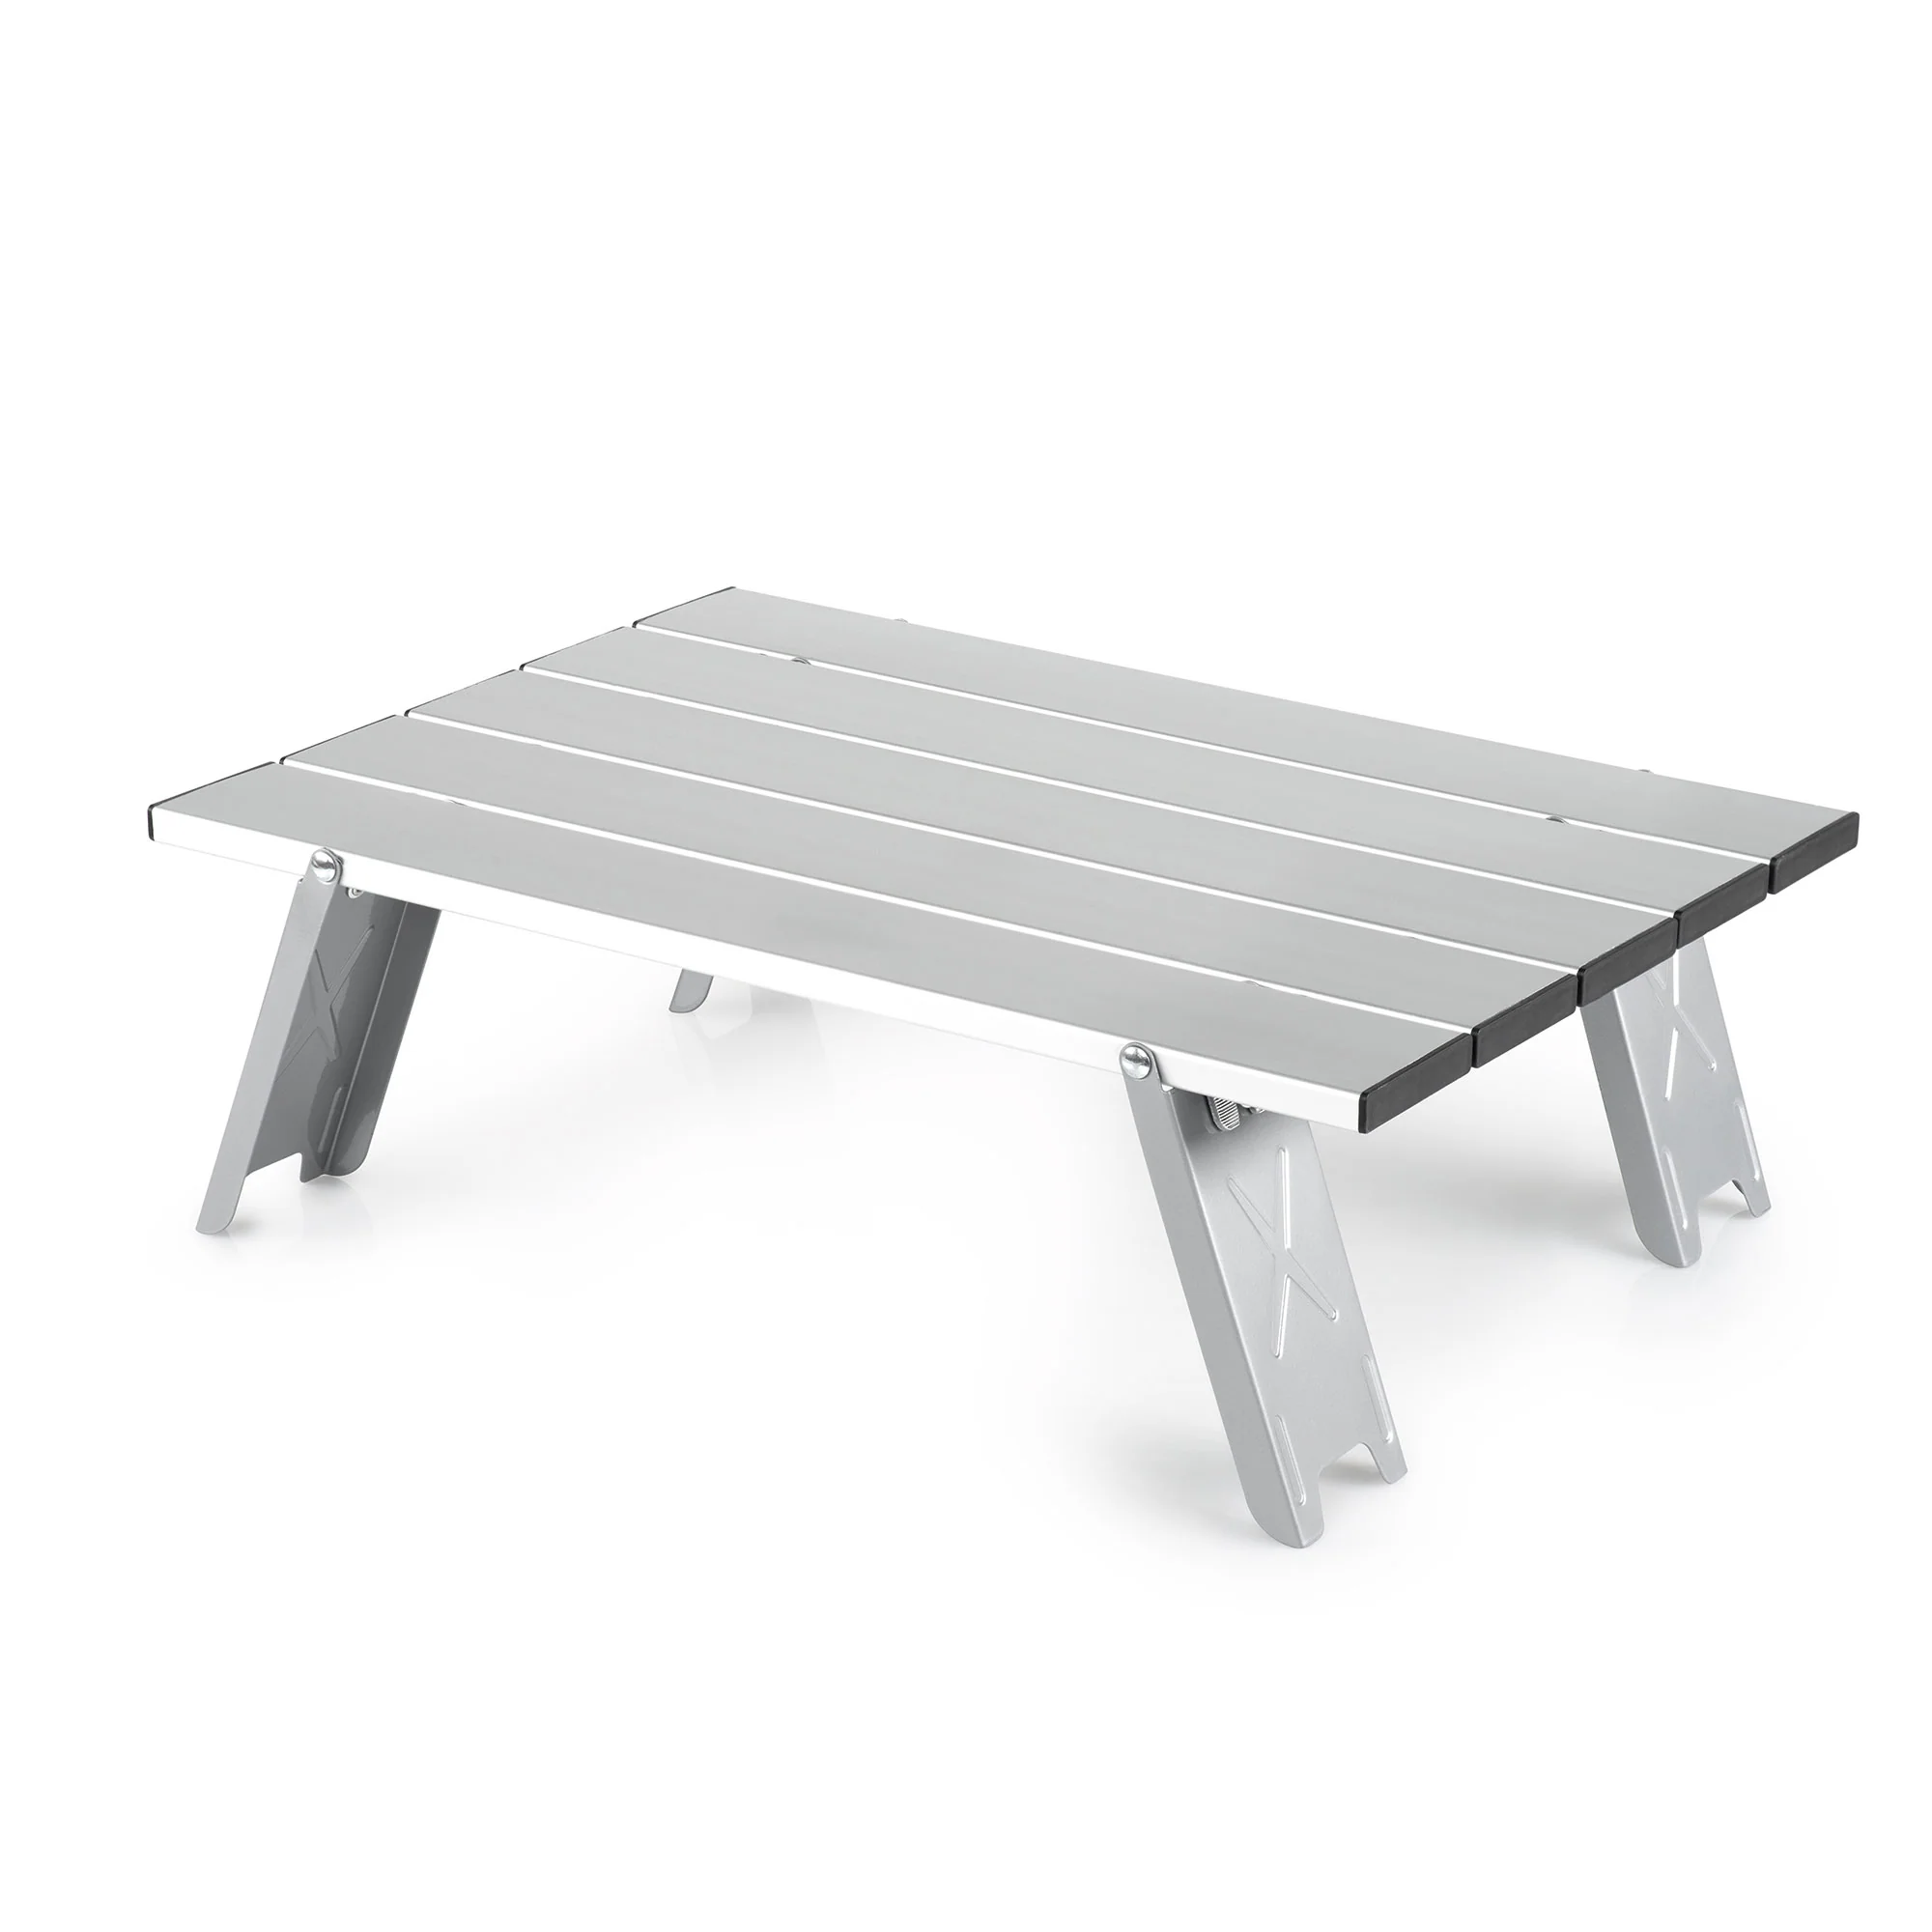 GSI outdoors Micro Table+